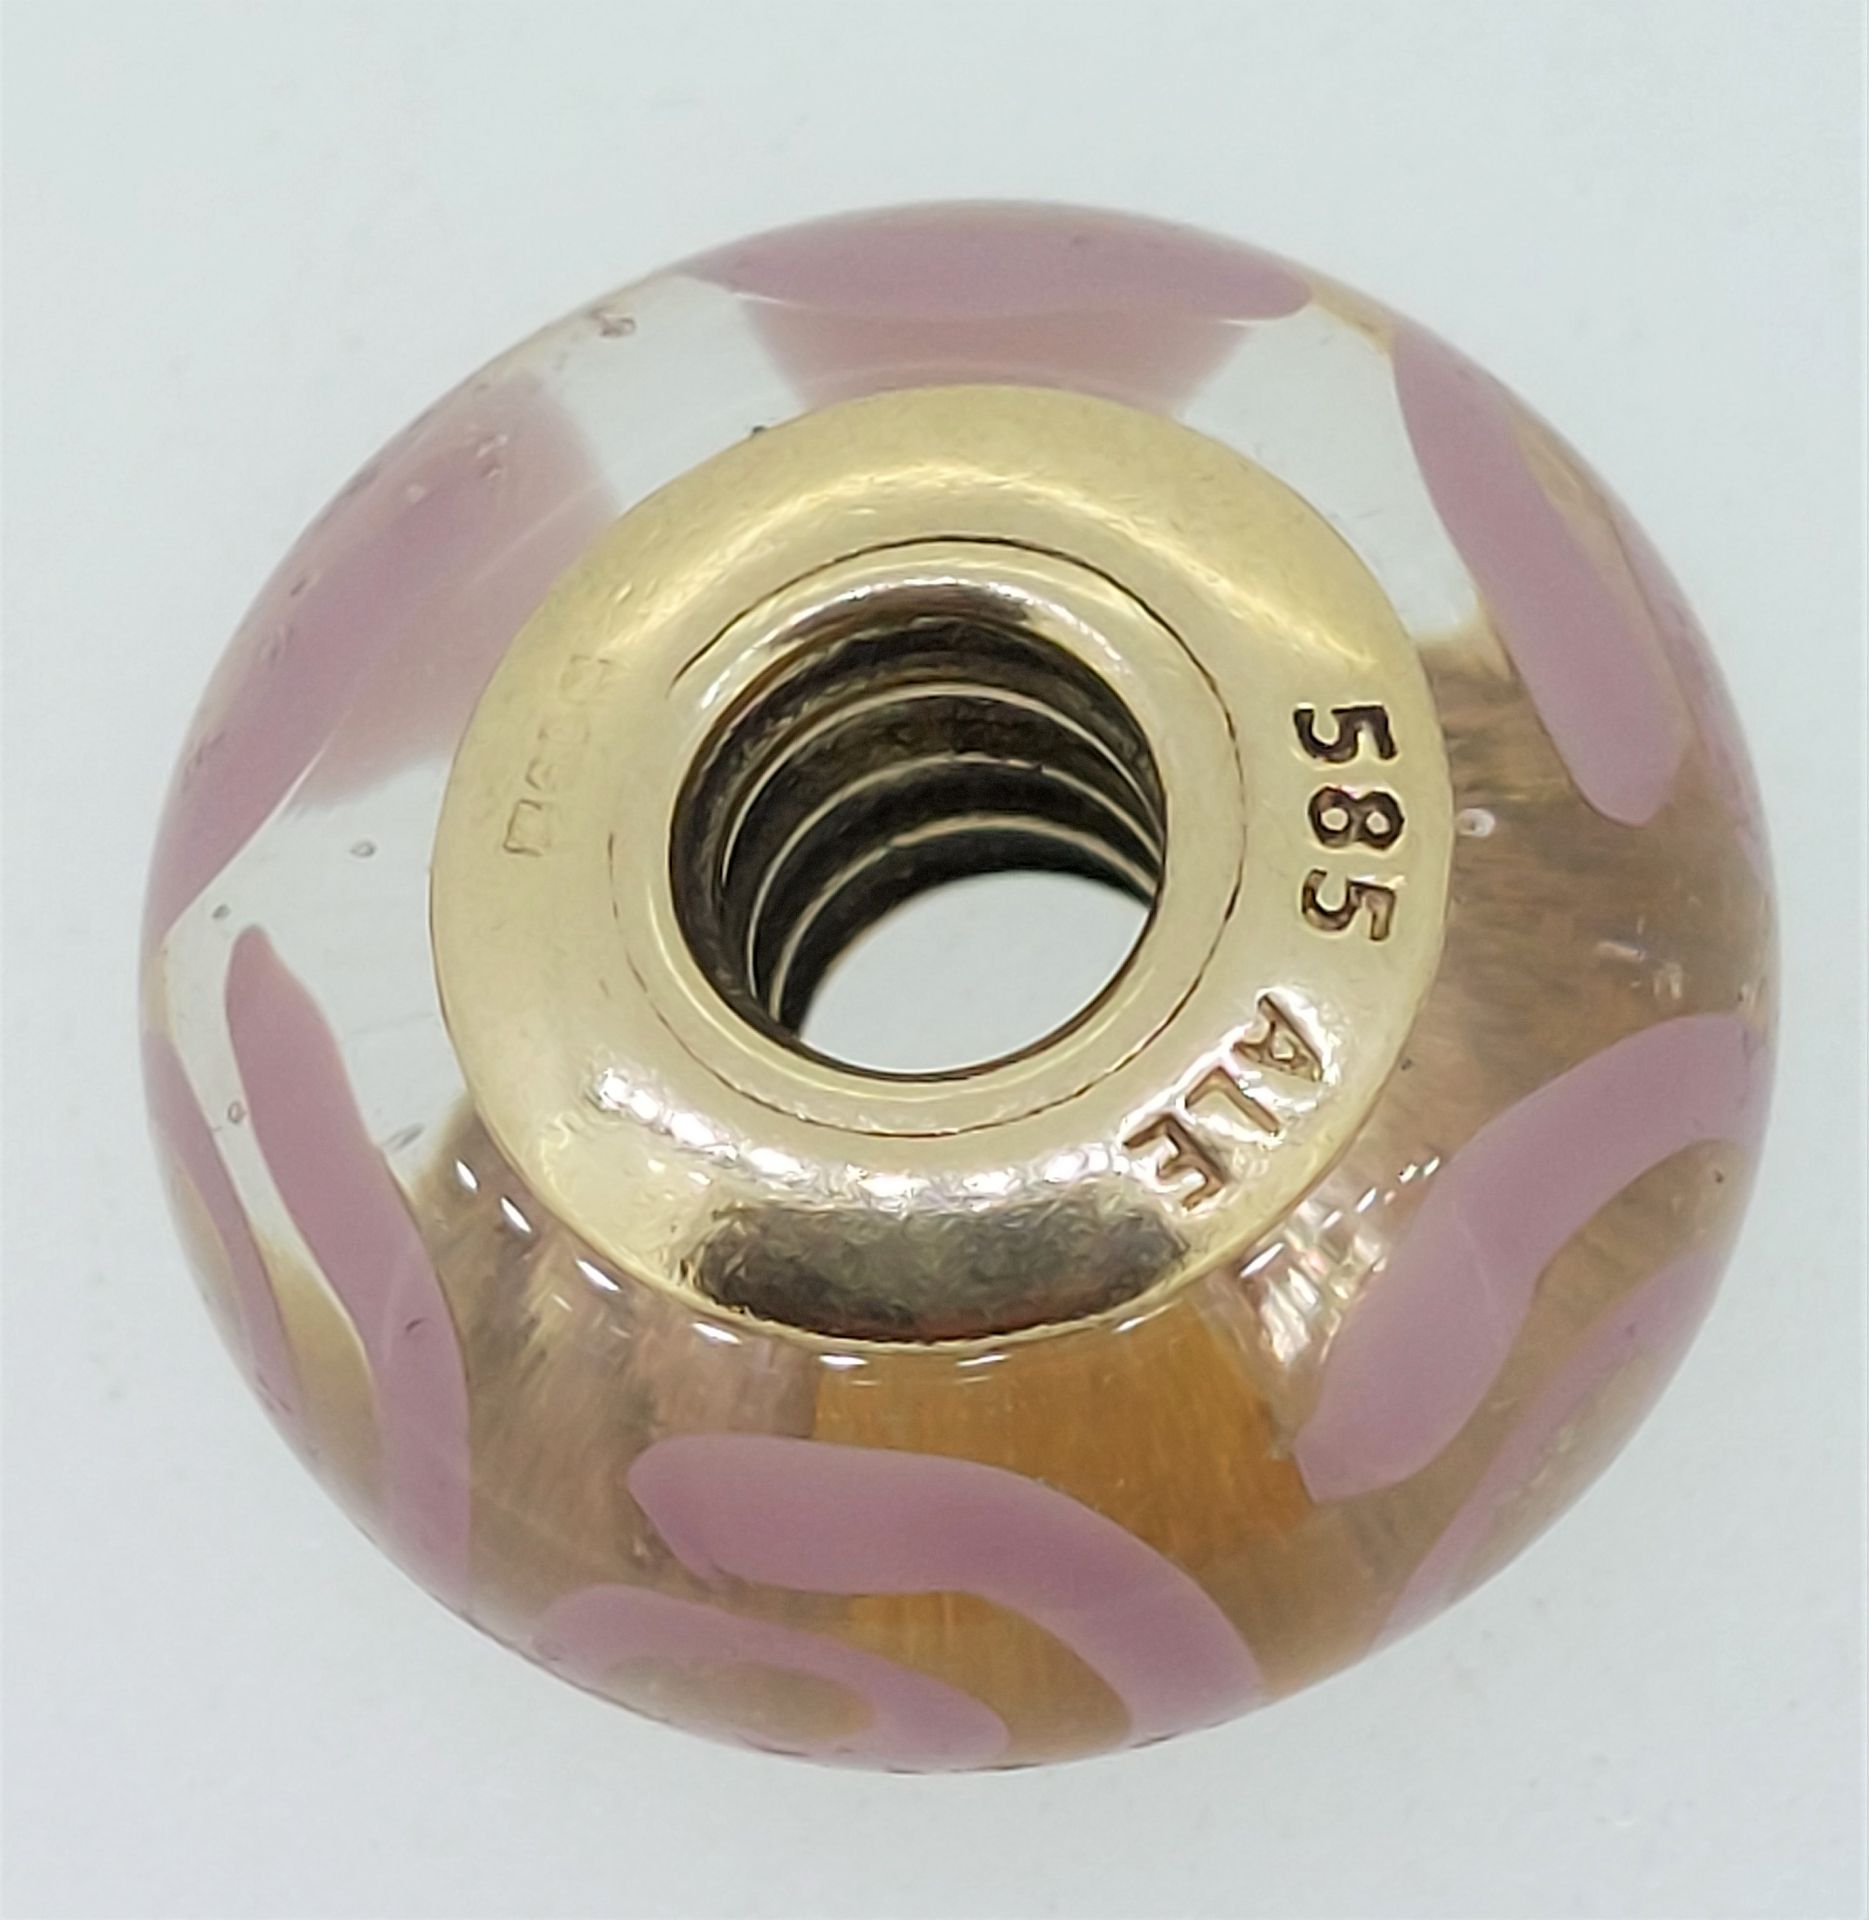 14ct Gold Pandora Charm 4.1g Murano 15mm x 8.9mm - Fully Hallmarked - Image 3 of 4